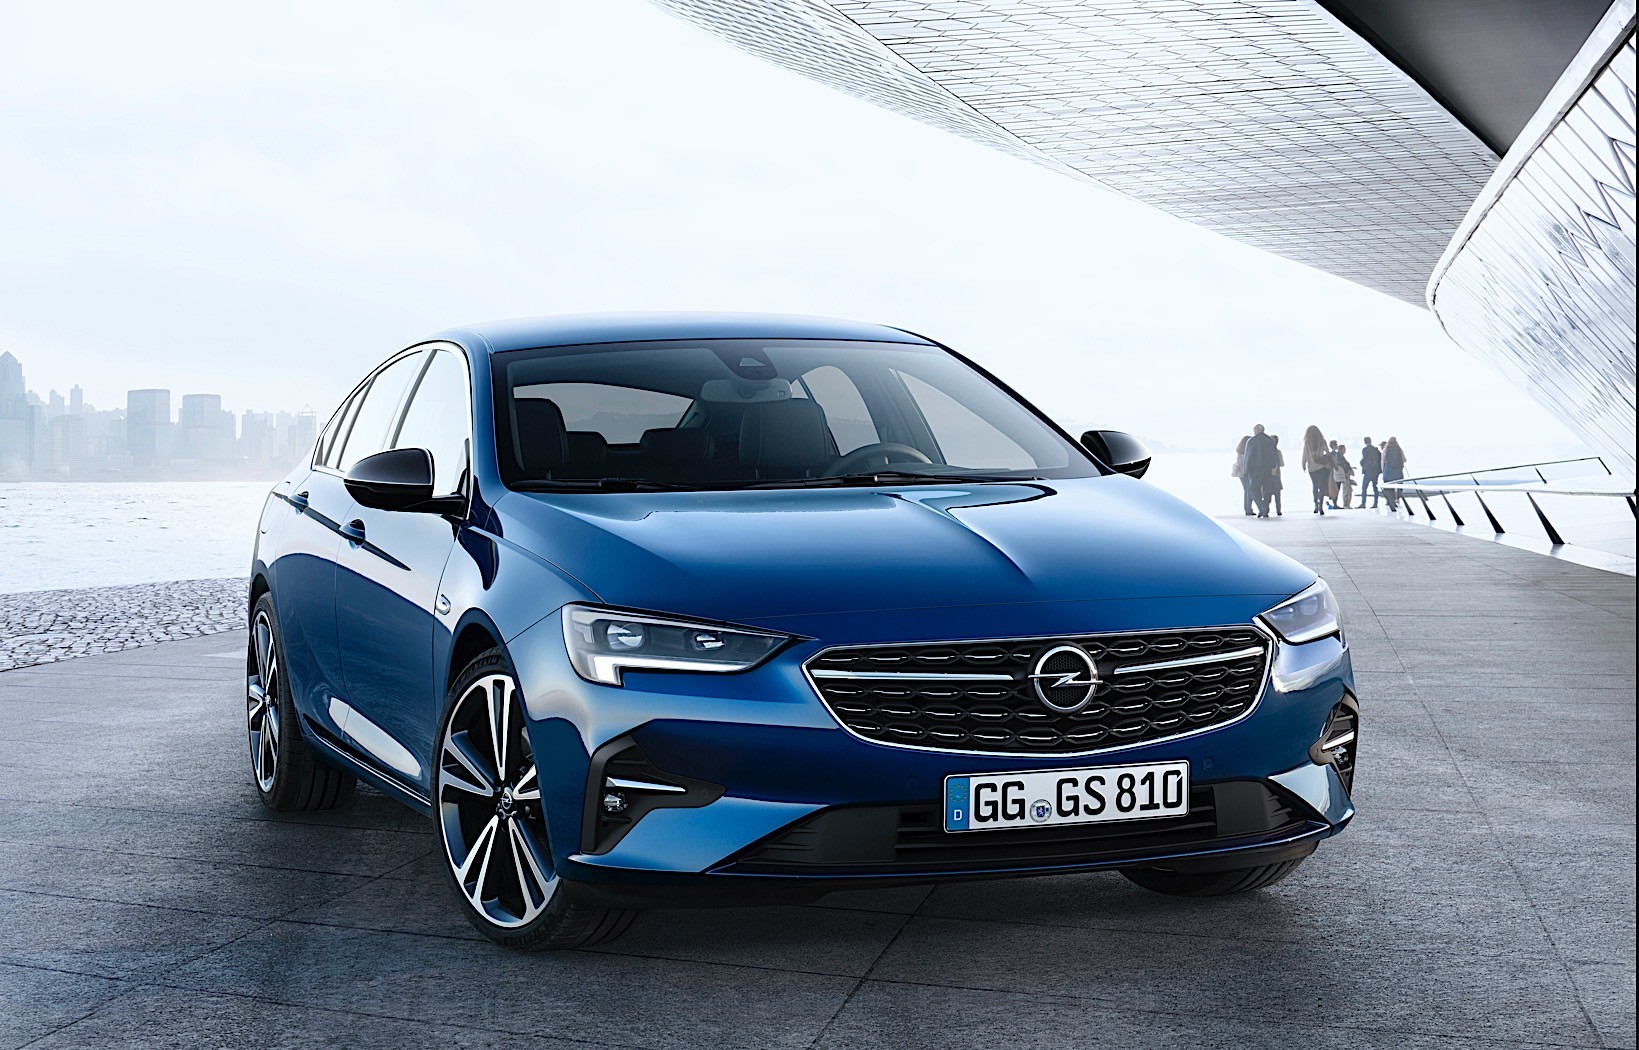 Opel / Insignia / 1.6 CDTI / Grand Sport Enjoy / GALLERIA-2020